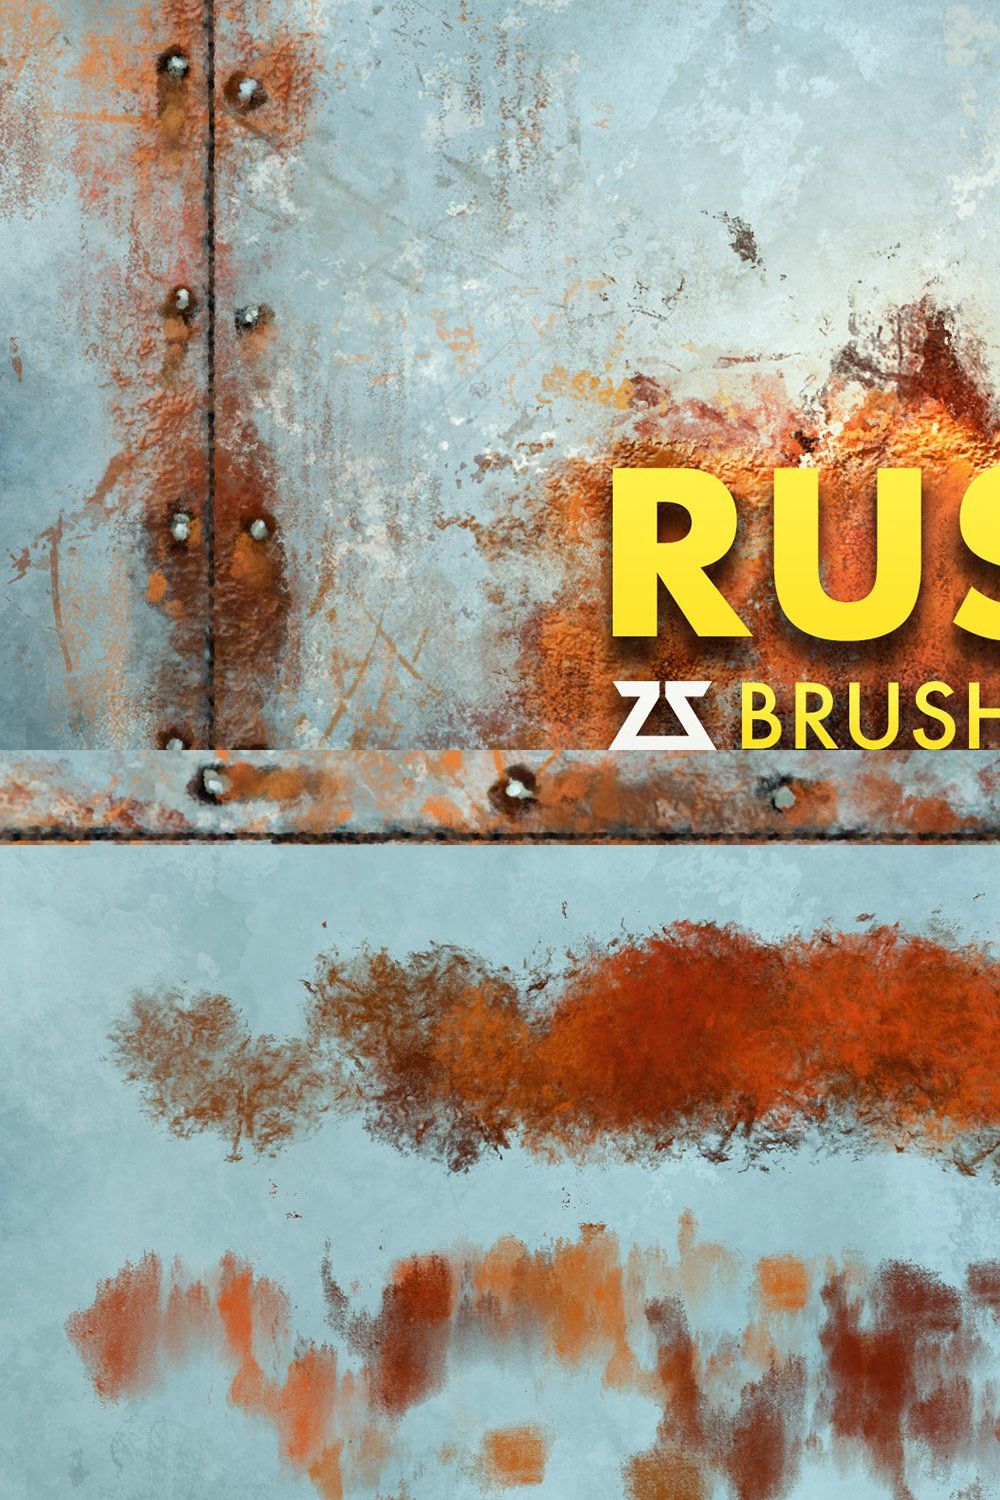 Rust Brush Set pinterest preview image.